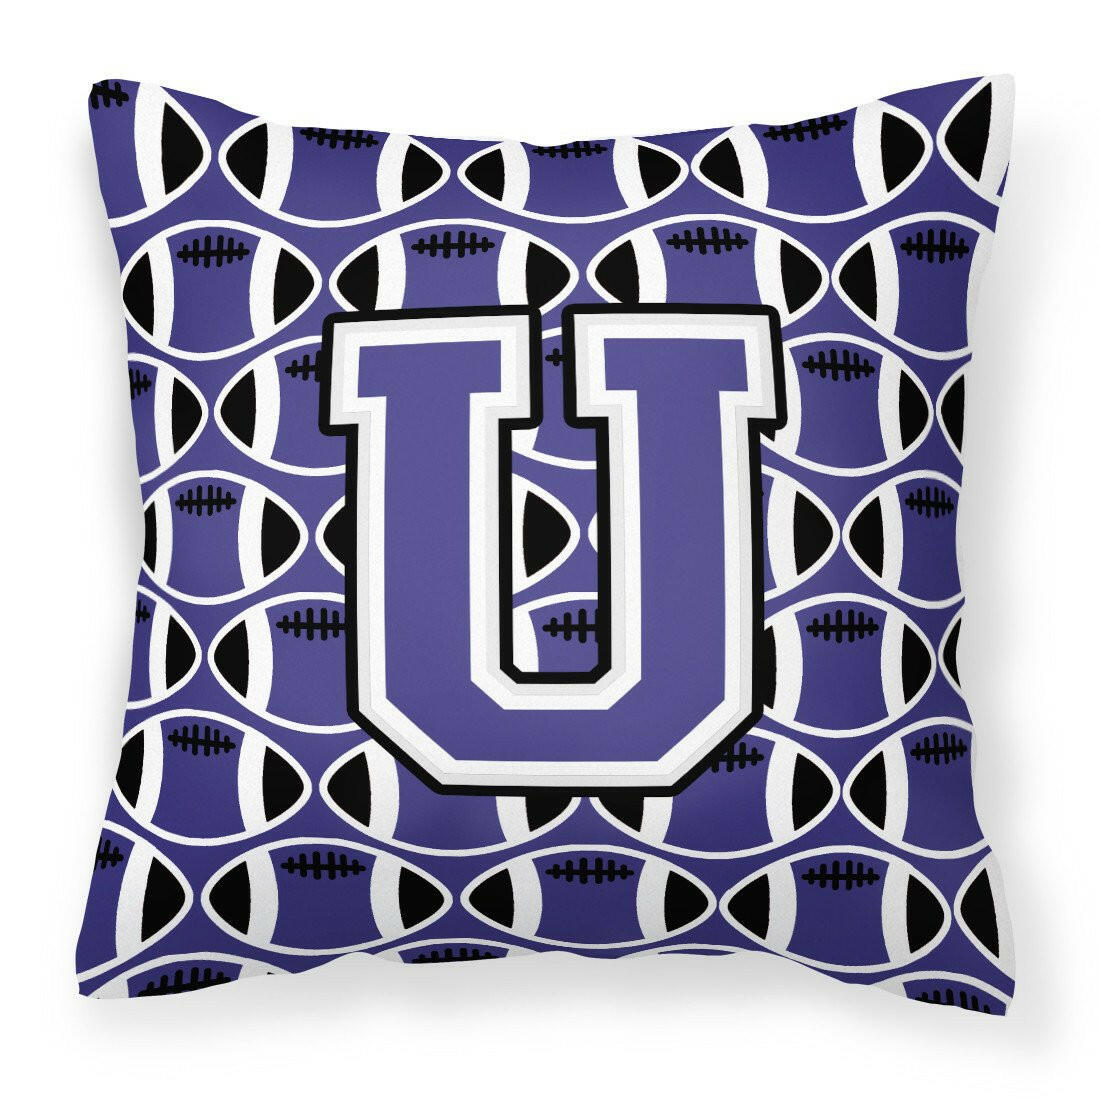 Letter U Football Purple and White Fabric Decorative Pillow CJ1068-UPW1414 by Caroline's Treasures